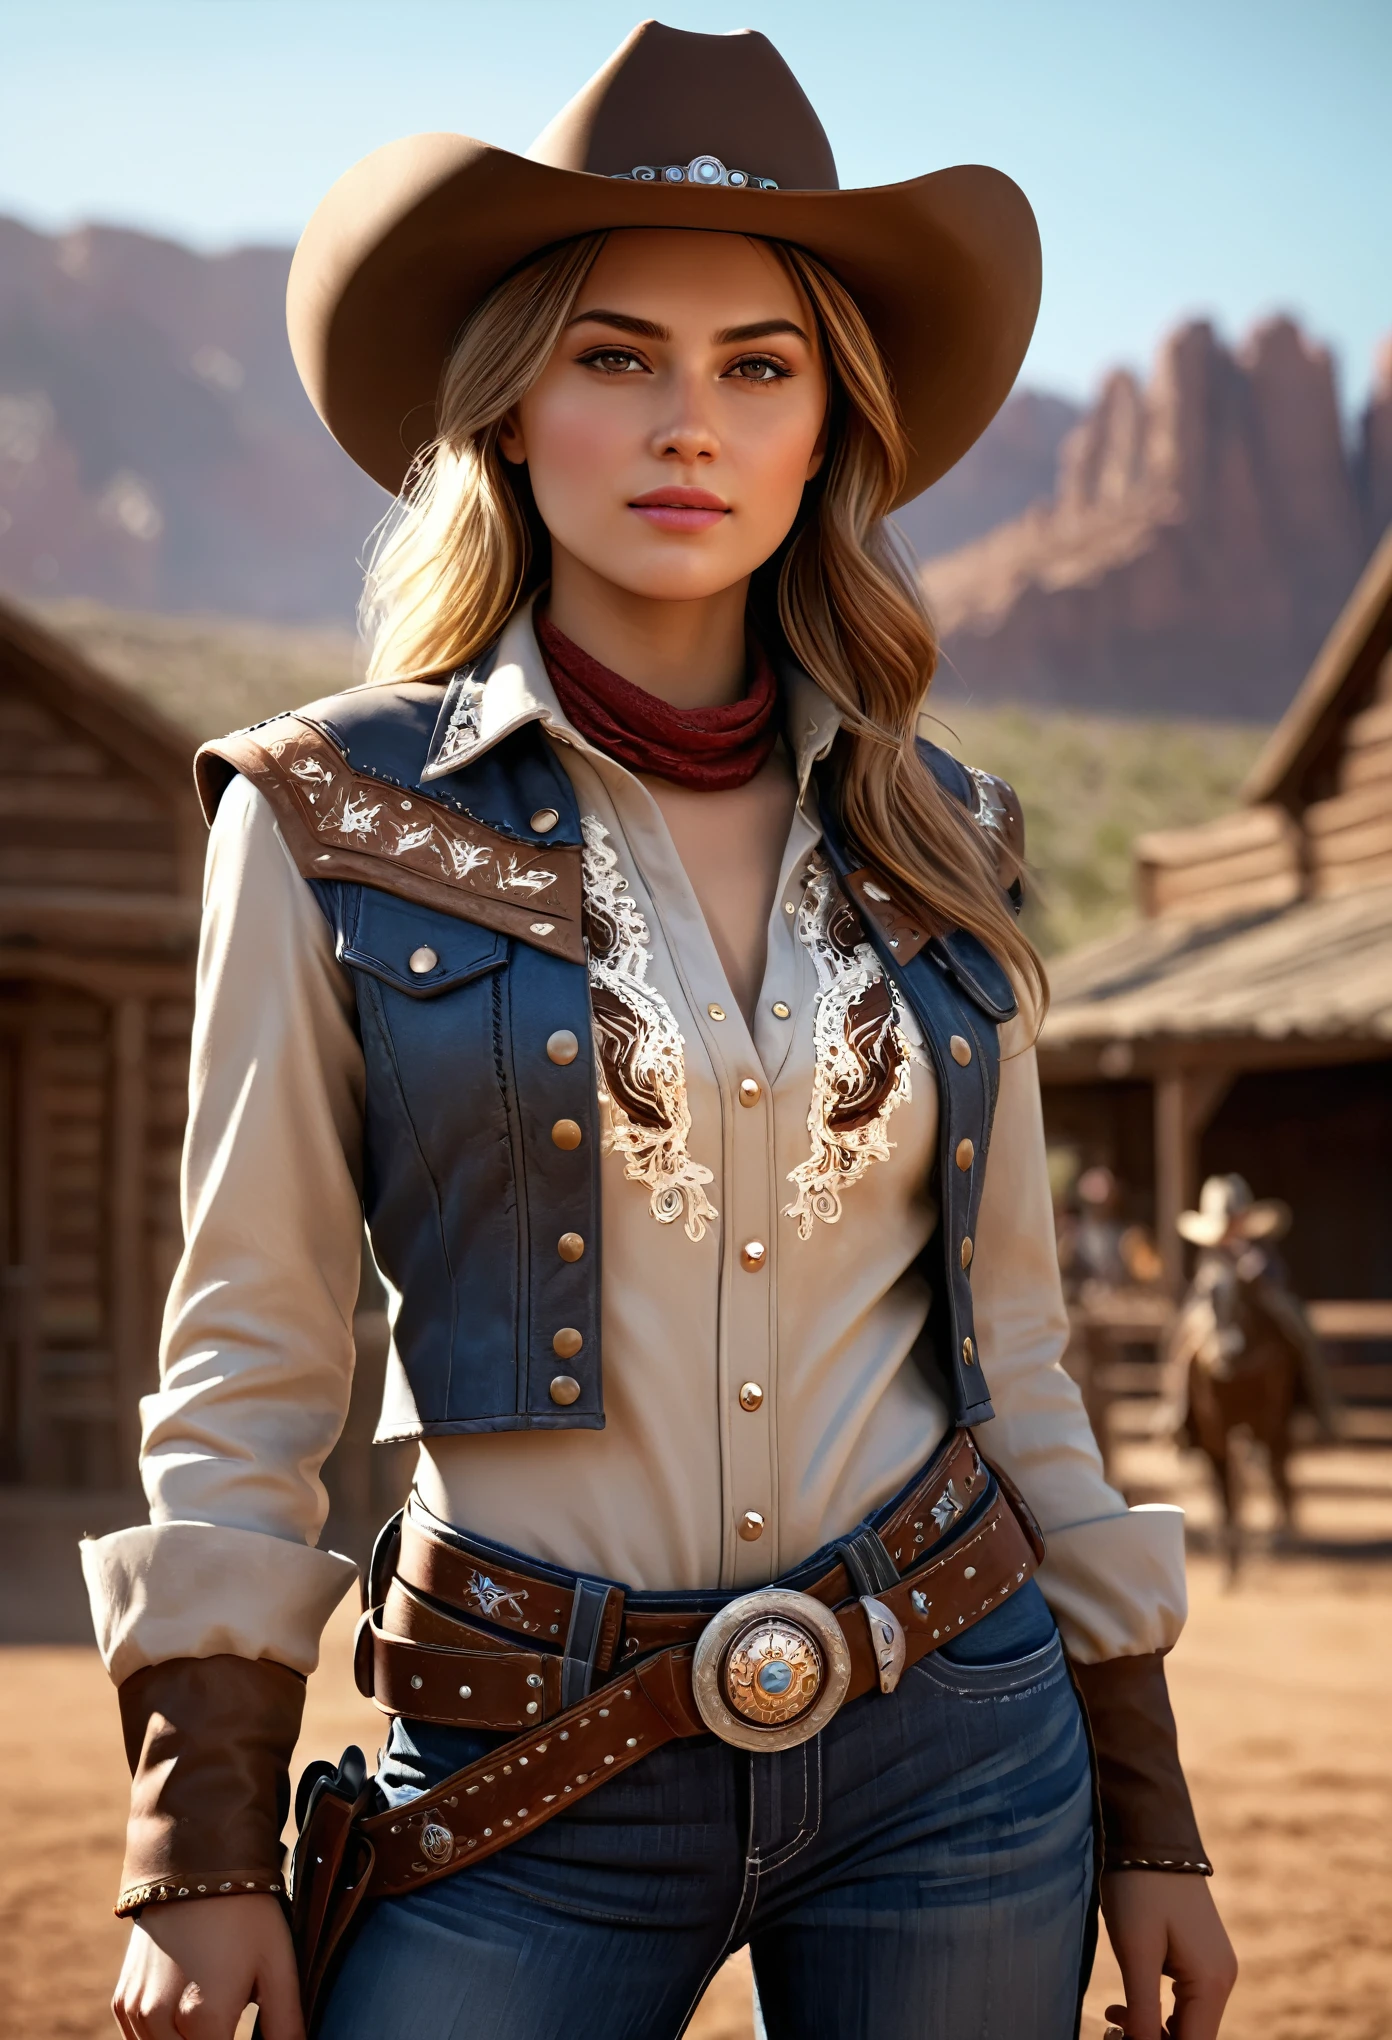 a beautiful young girl wearing a highly 實際的 western cowgirl outfit, 幻想藝術, photo實際的, 動態照明, 藝術站, 極為細緻的臉部, 4k, 獲獎的, (最好的品質,4k,8K,高解析度,傑作:1.2),超詳細,(實際的,photo實際的,photo-實際的:1.37),錯綜複雜的細節,戲劇性的姿勢,電影構圖,鮮豔的色彩,自然膚色,發光的亮點,大气照明,景深,體積照明